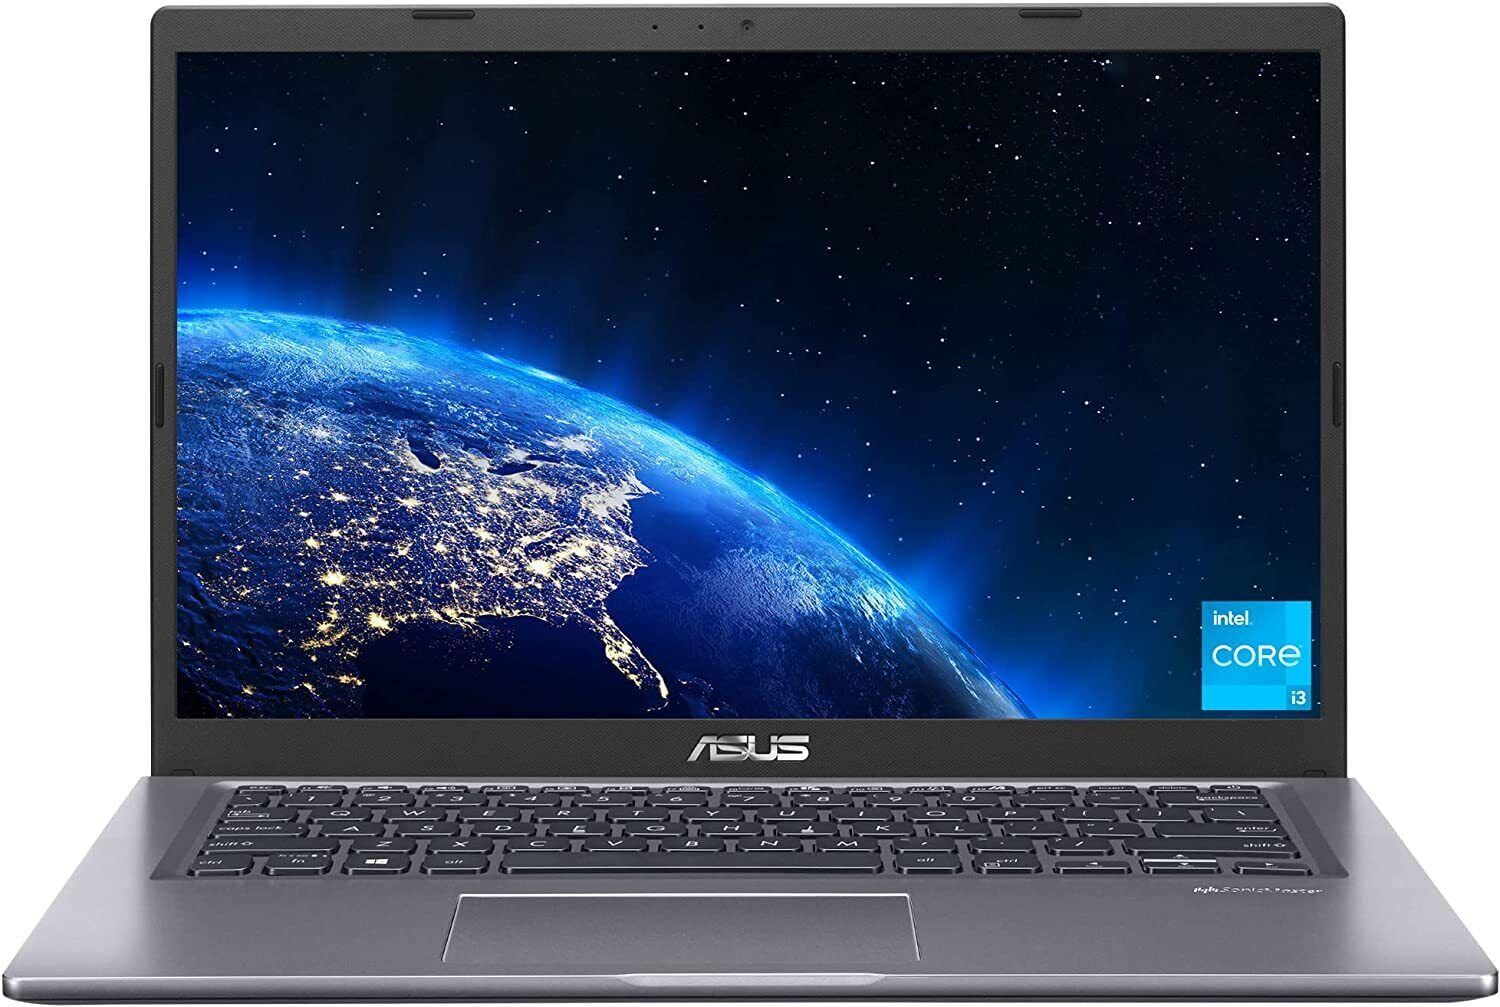  ASUS 2022 VivoBook 14 Laptop, Intel Core i3-1005G1, 4GB RAM,  128GB SSD, 14 Full HD Display, Webcam, Wi-Fi, HDMI, USB-C, Dreamy White,  Windows 10-Free Windows 11 Update, LIONEYE Bundle : Electronics